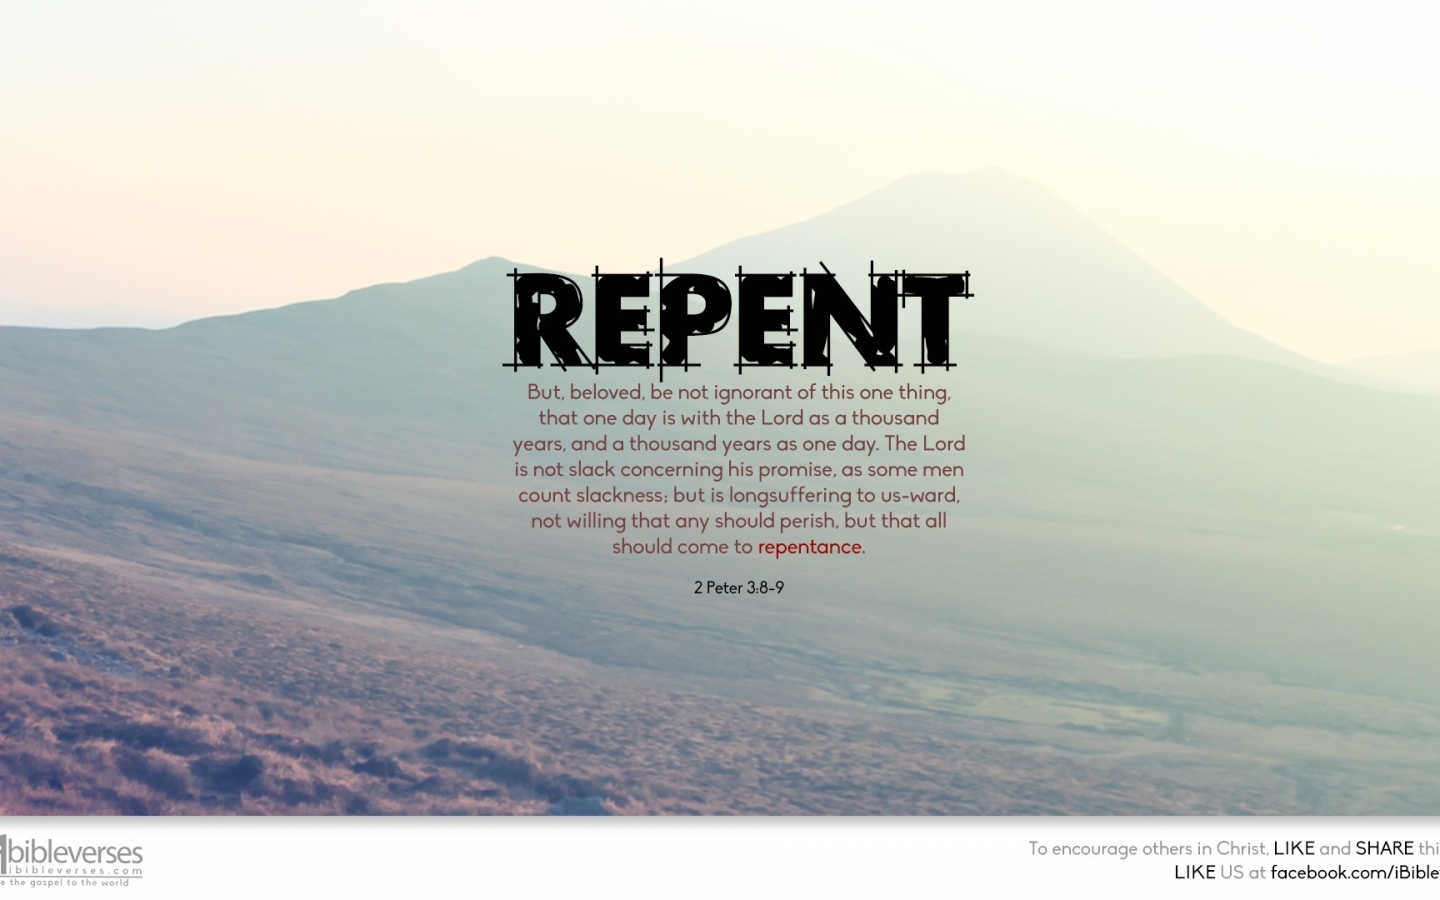 All Should E To Repentance Crossmap